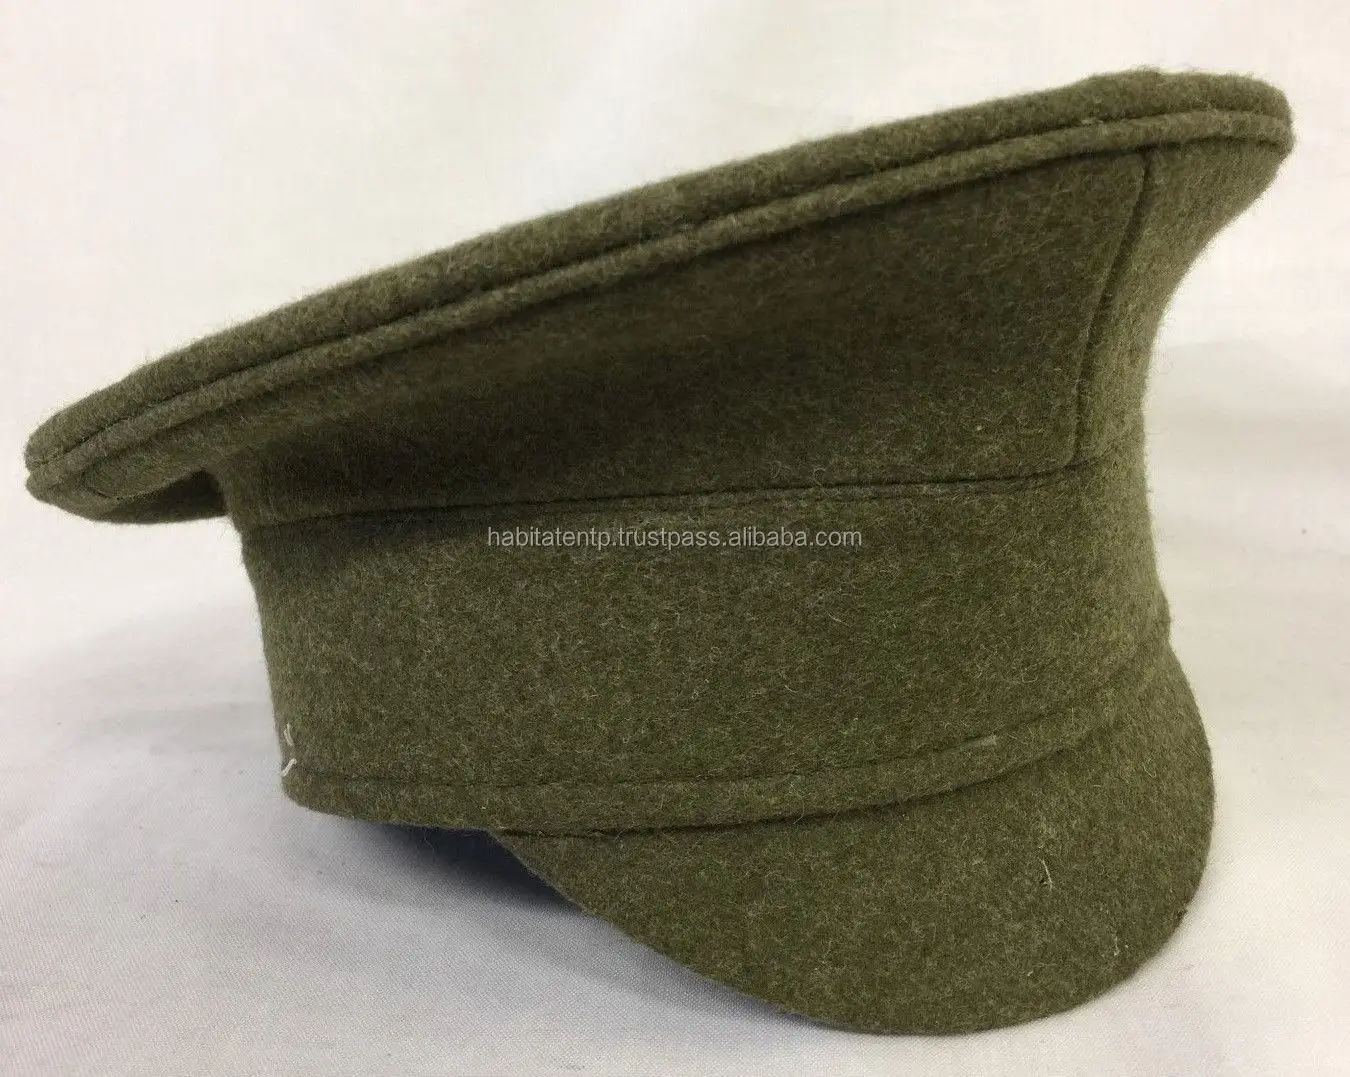 Reproduction Khaki Dress Peaked Service British Military Cap 1945 Great ...